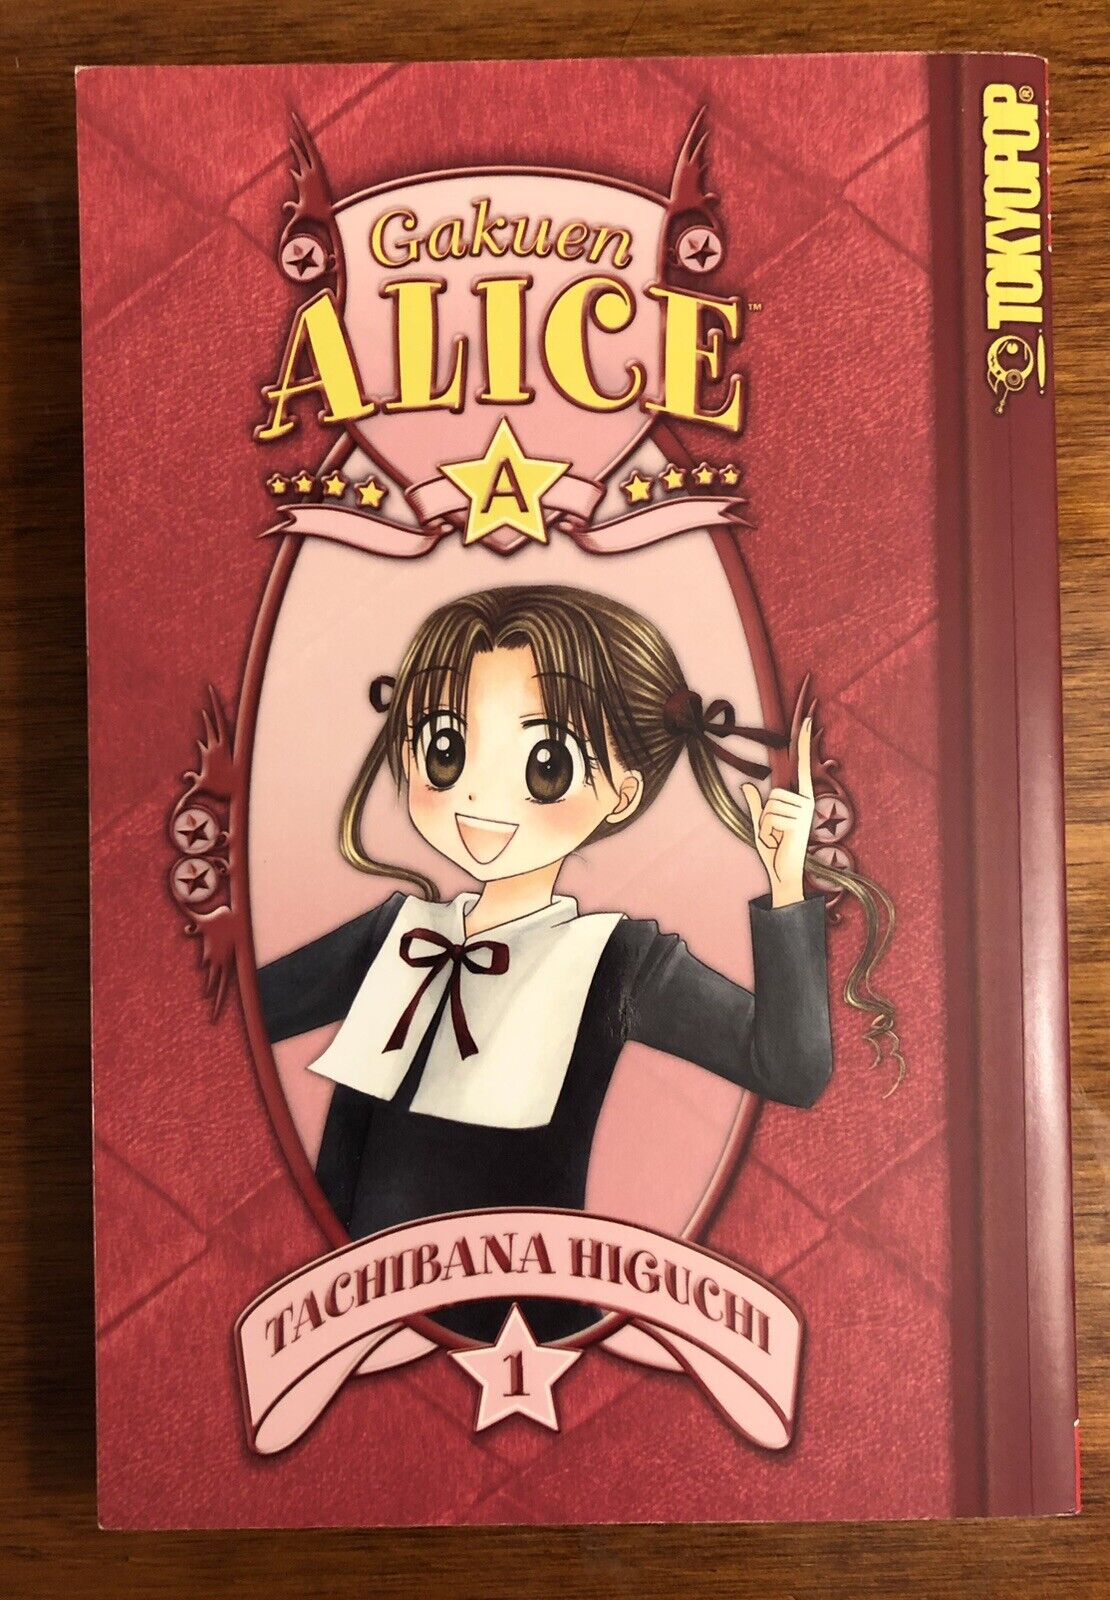 Gakuen Alice Volume 1 english manga by Tachibana Higuchi, out of print